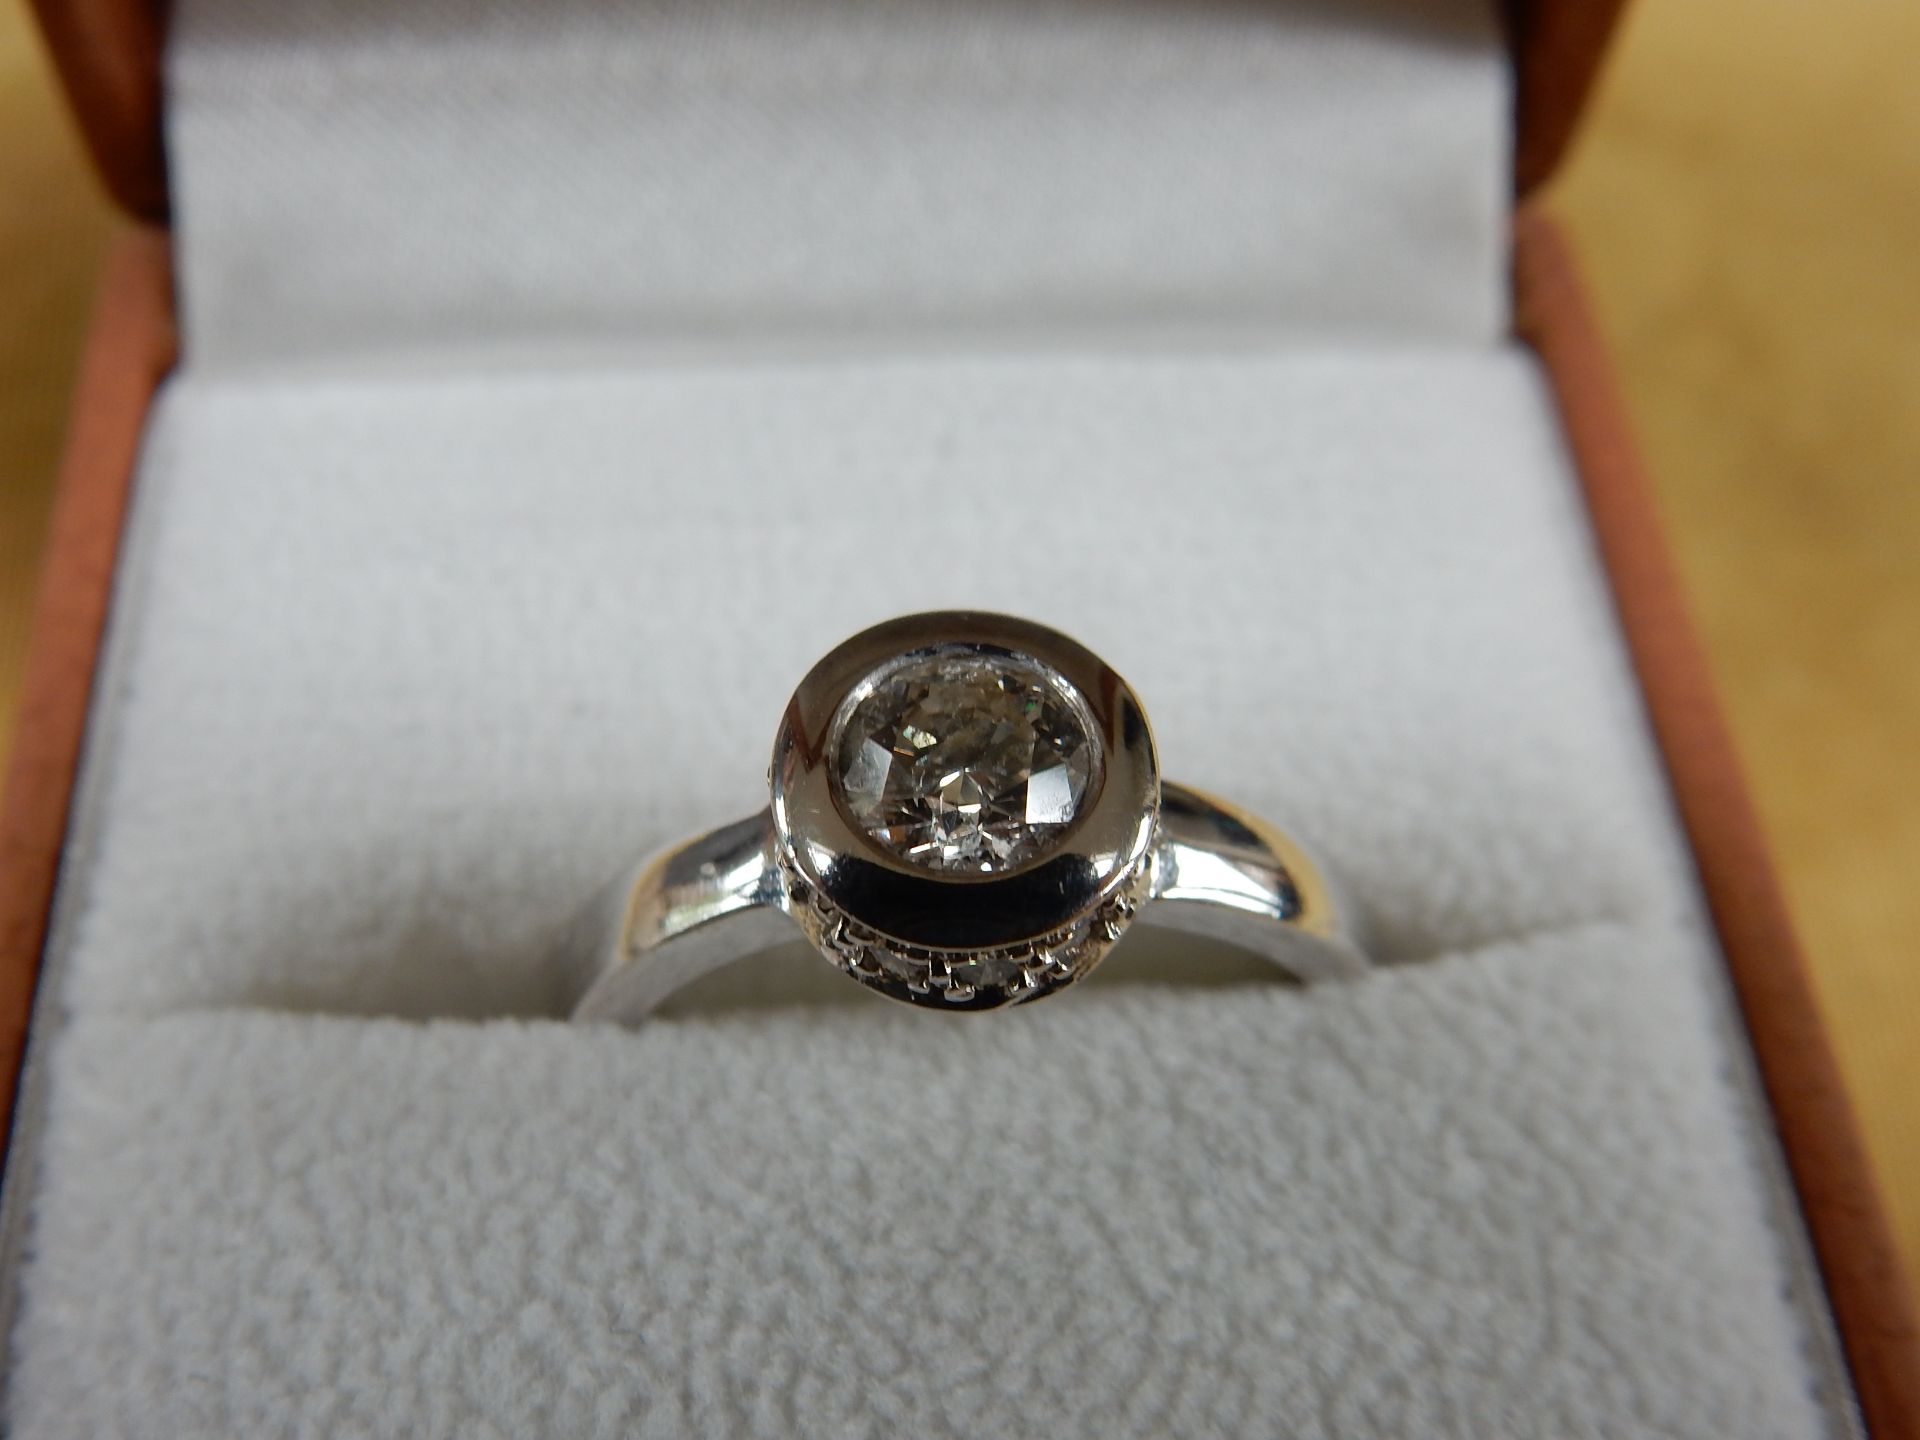 A 14 carat white gold single stone ring with diamonds set mount sides.